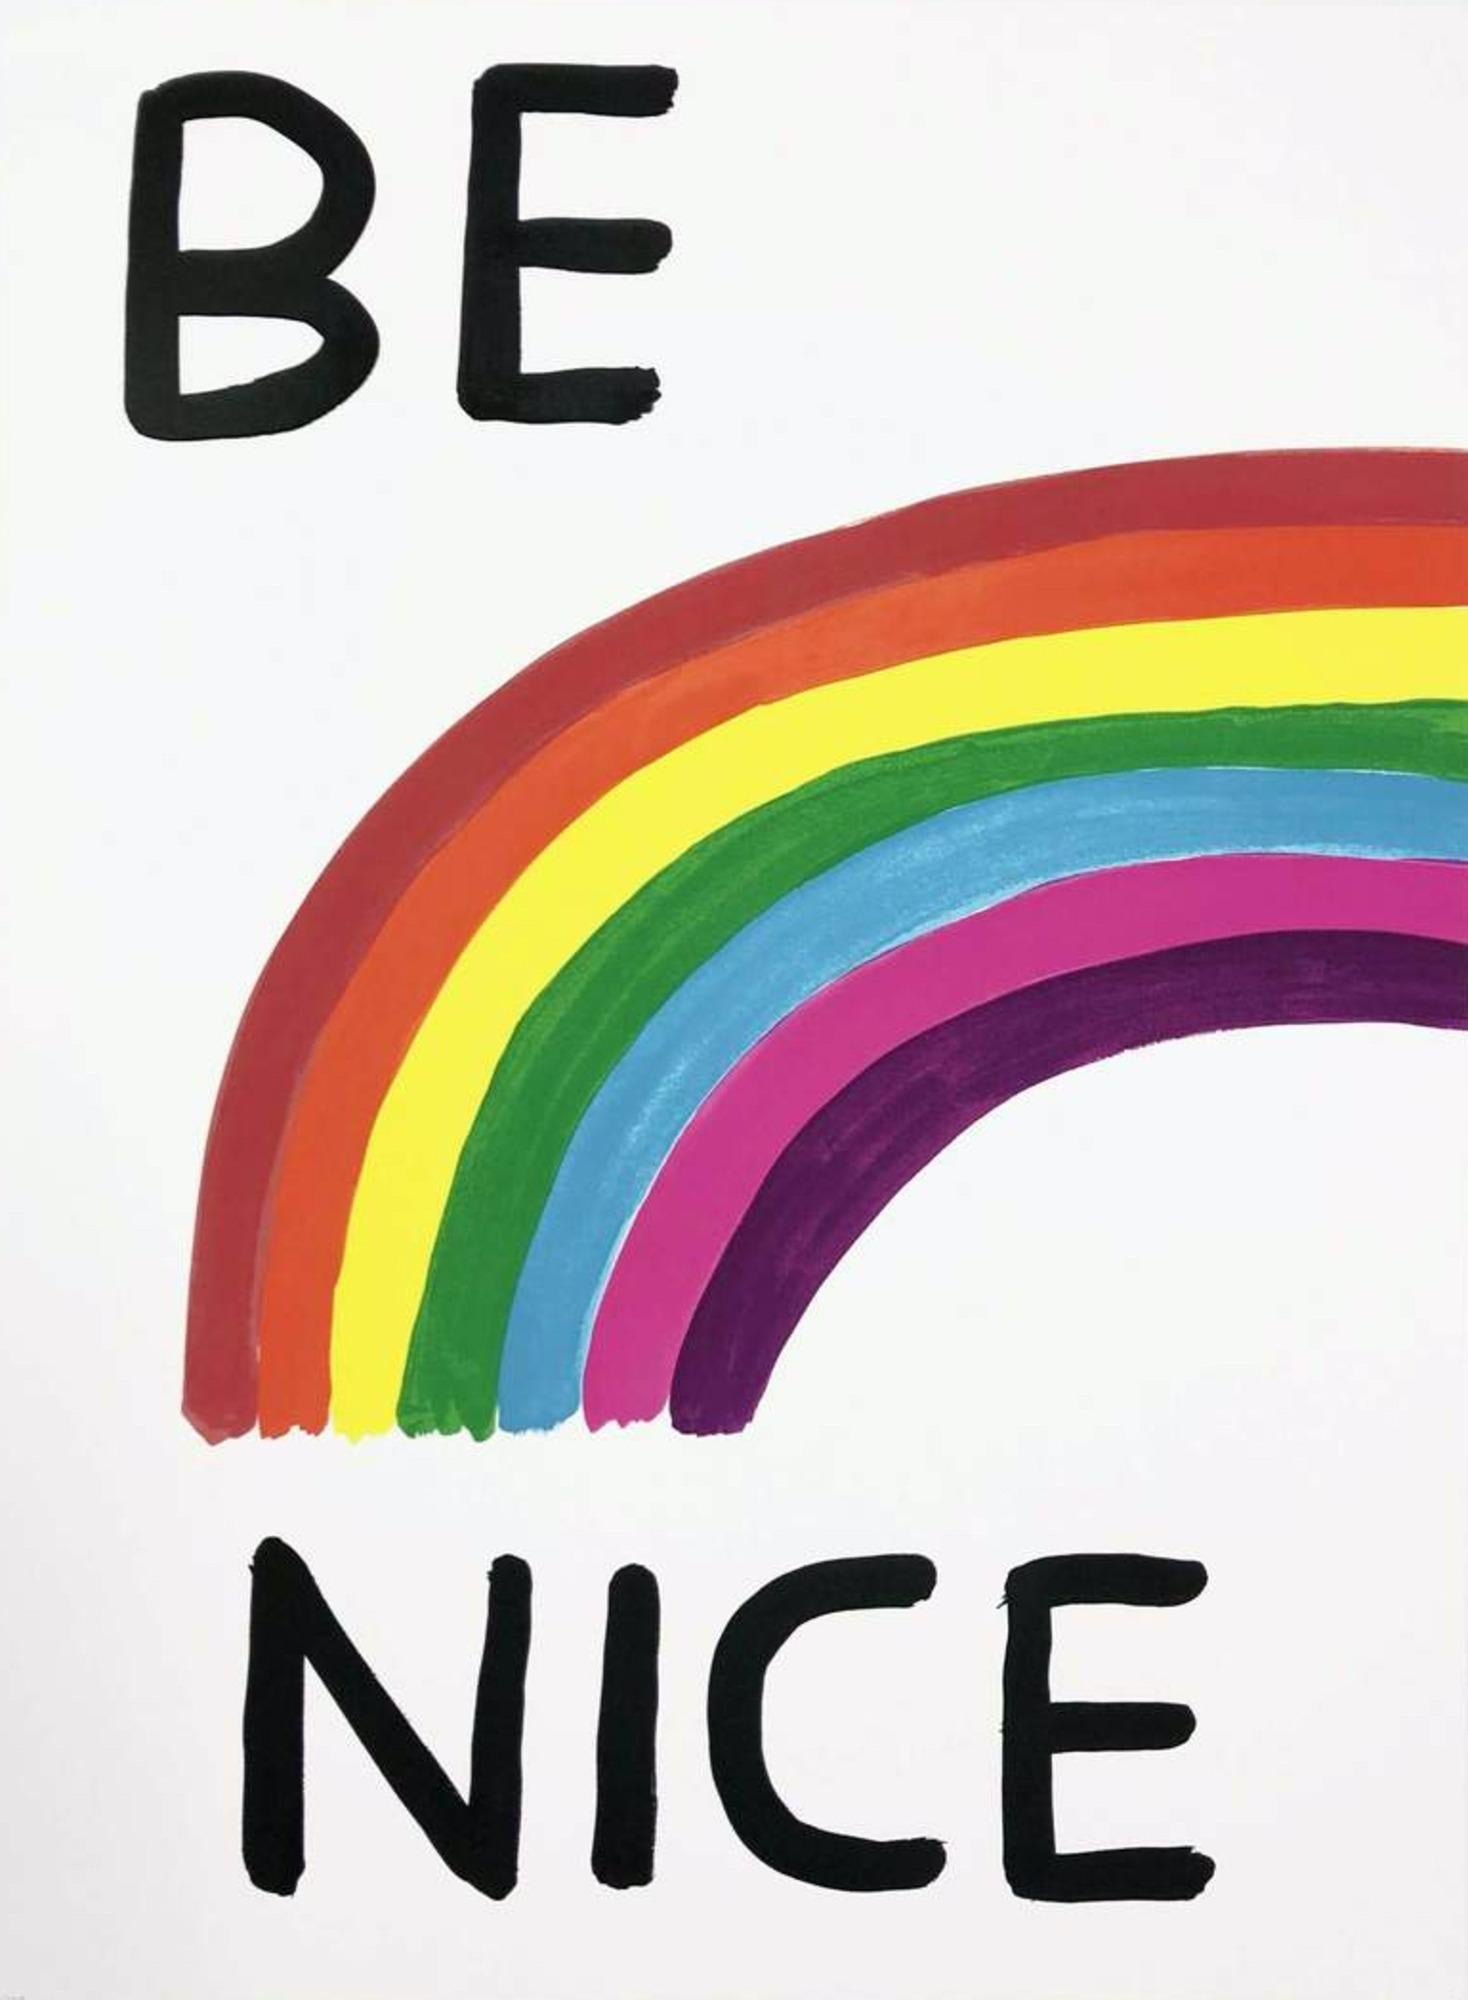 Be Nice - Print by David Shrigley